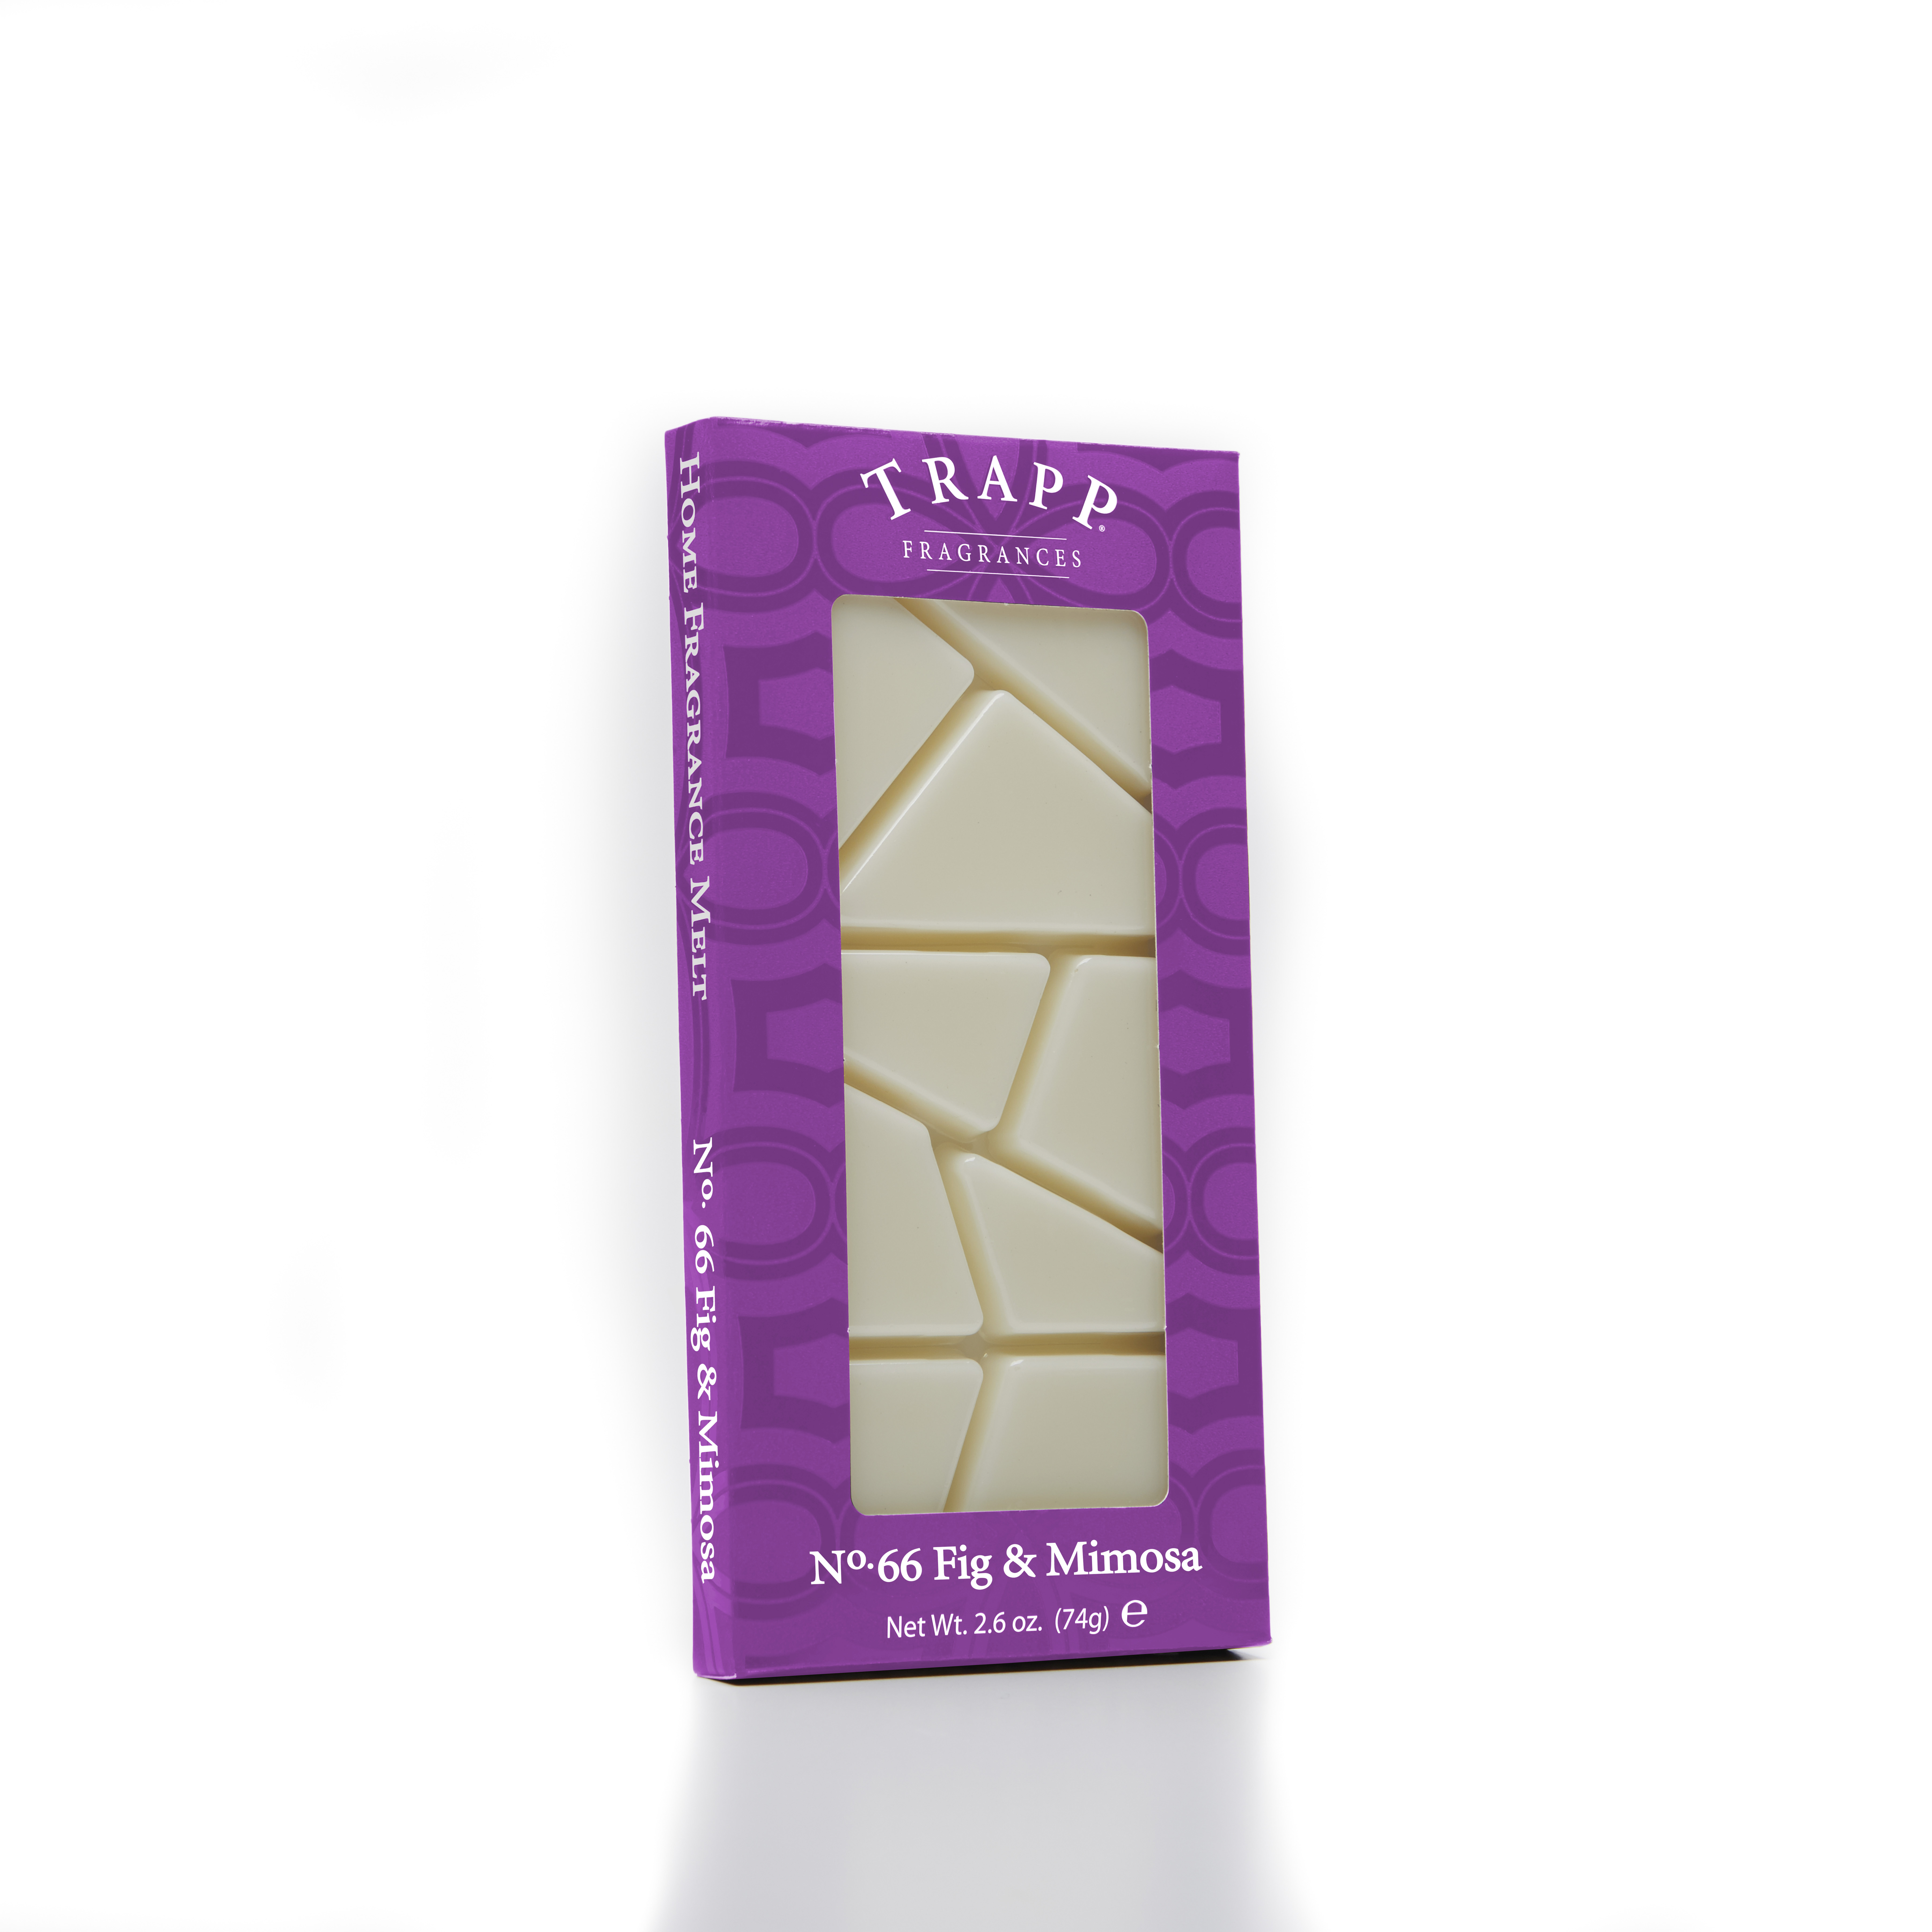 Trapp Fragrances Wax Melts No. 66 Fig & Mimosa